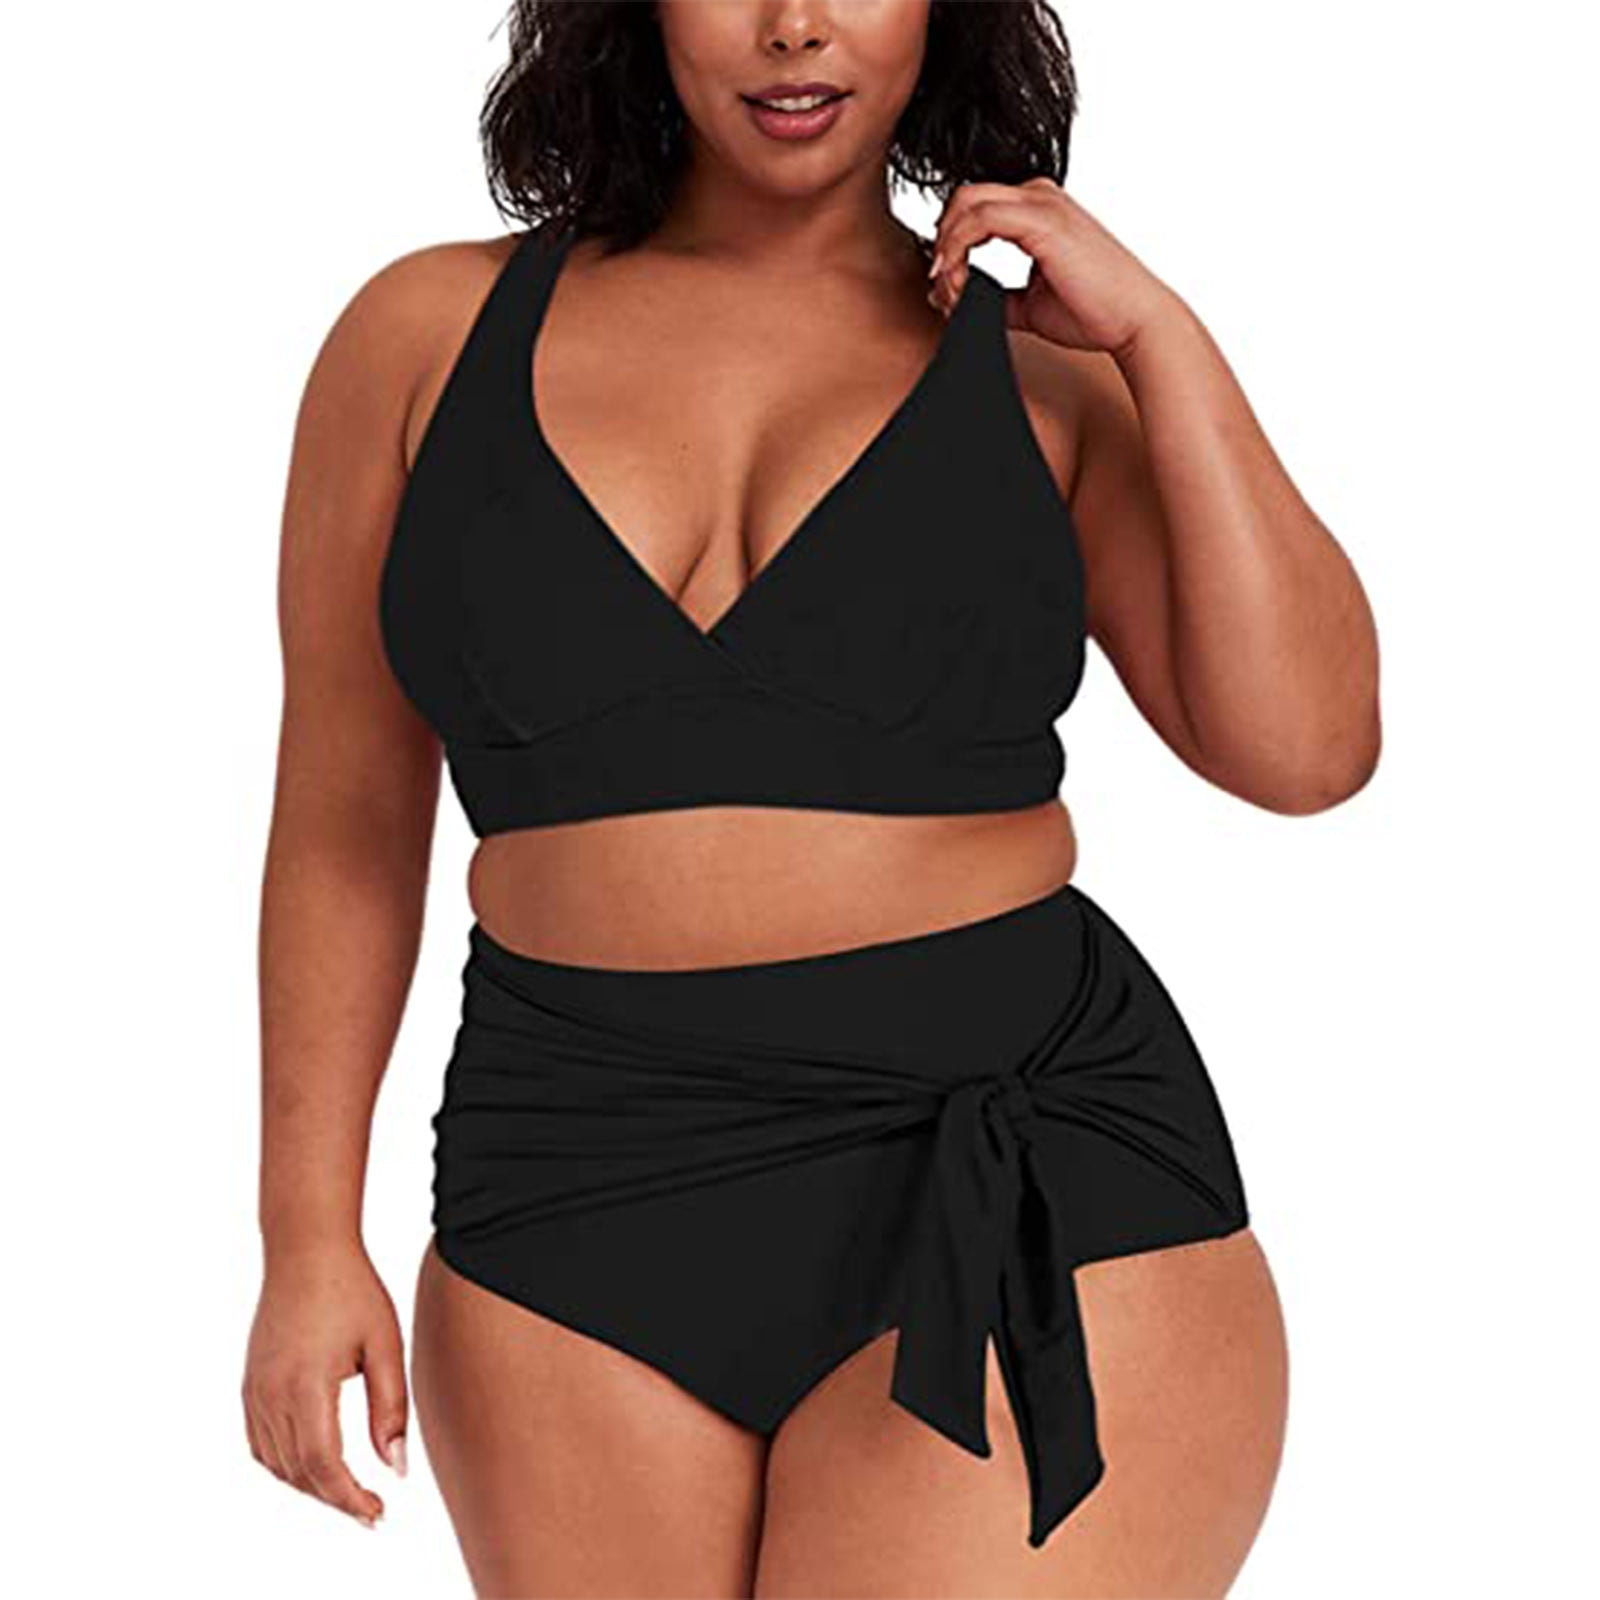 Plus Size Swimsuit for Women Solid Push Up Padded Plus Size Bikini Set Swimsuit Bathing Suit Swimwear, Summer Savings Clearance - Walmart.com